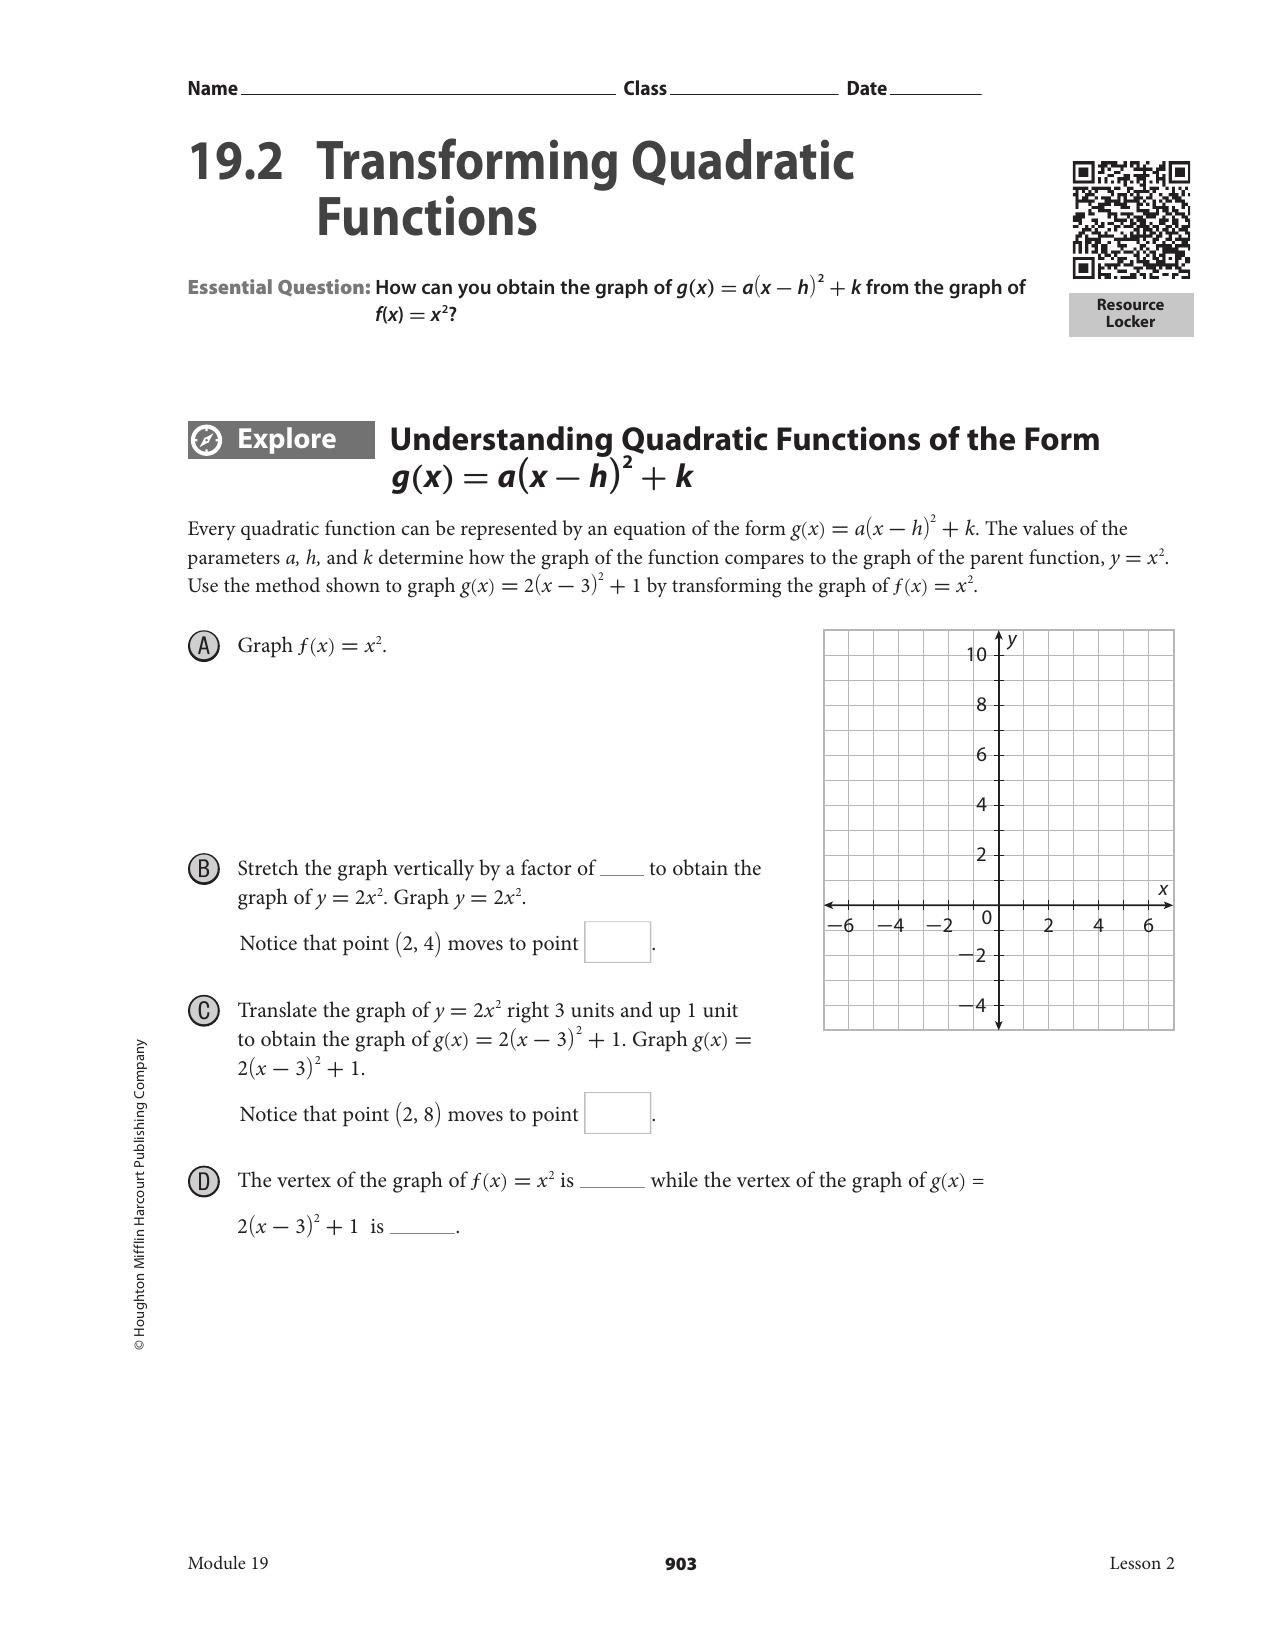 192 Transforming Quadratic Functions